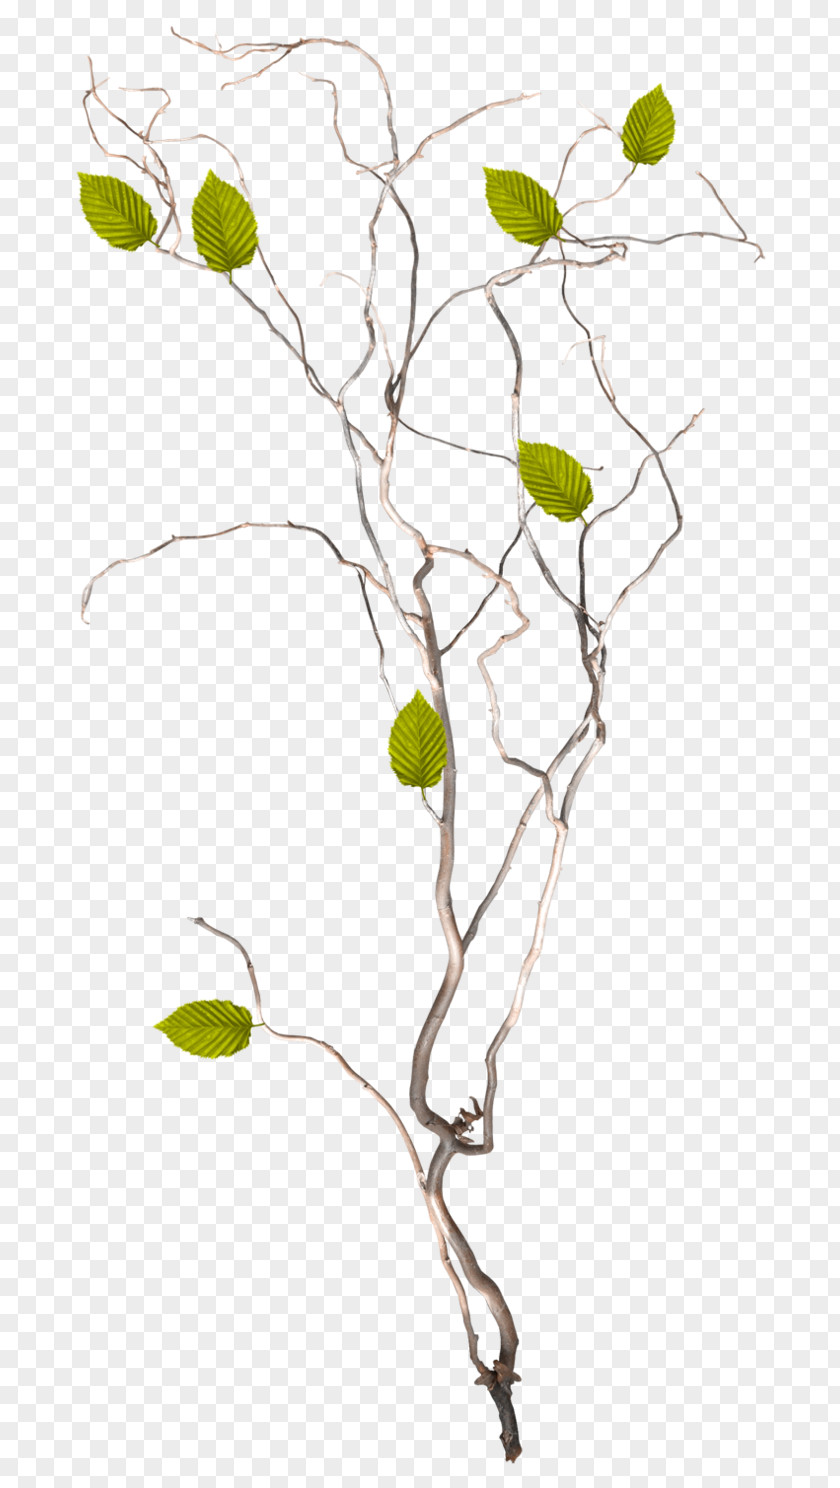 Twig /m/02csf Drawing Plant Stem Leaf PNG